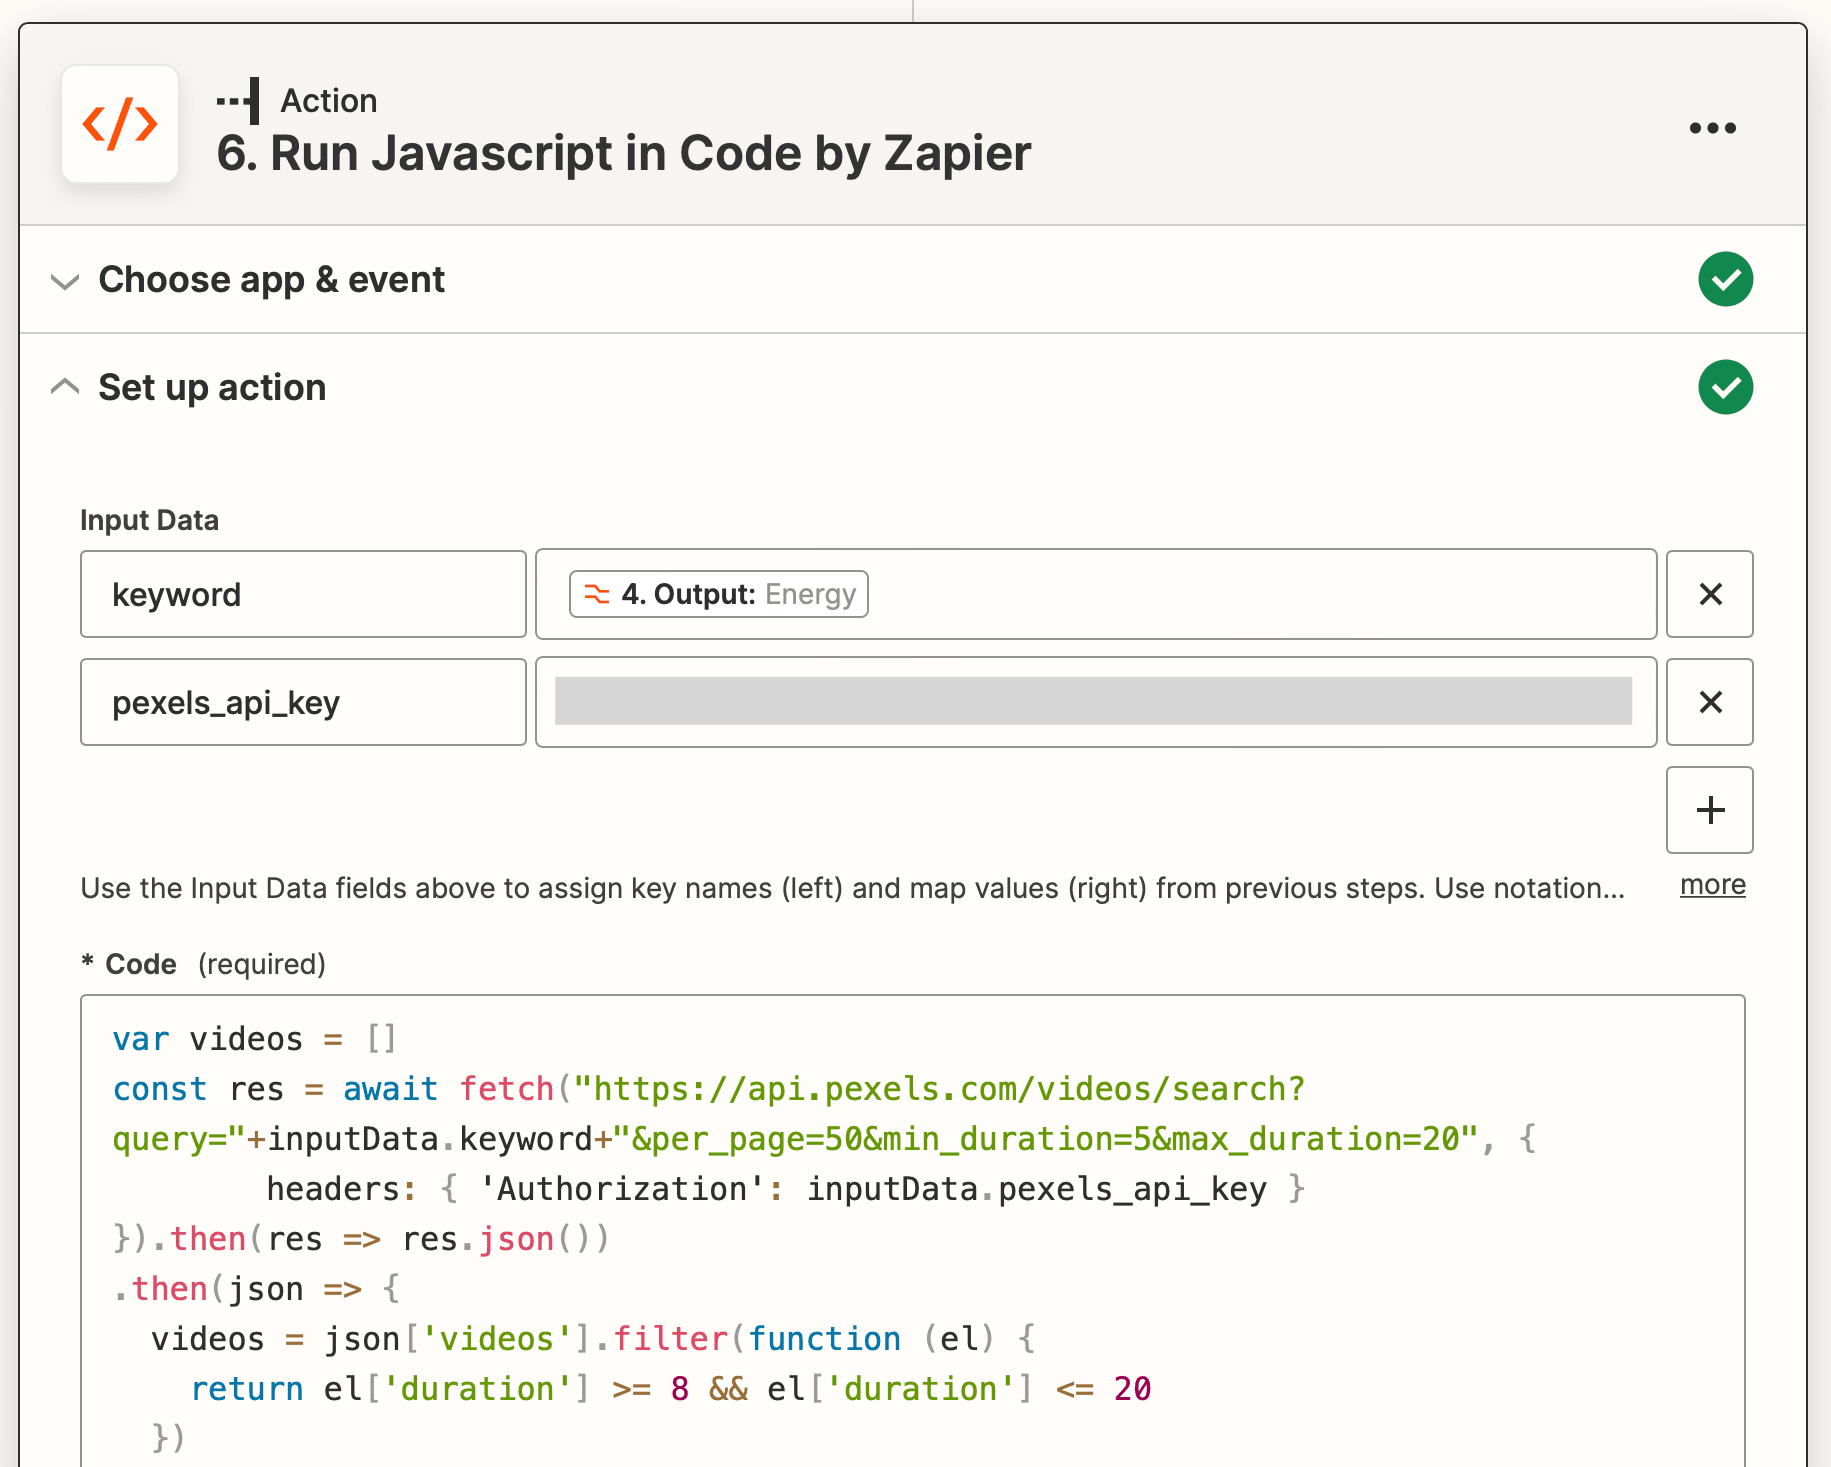 Screenshot of Zapier run Javascript in code action setup